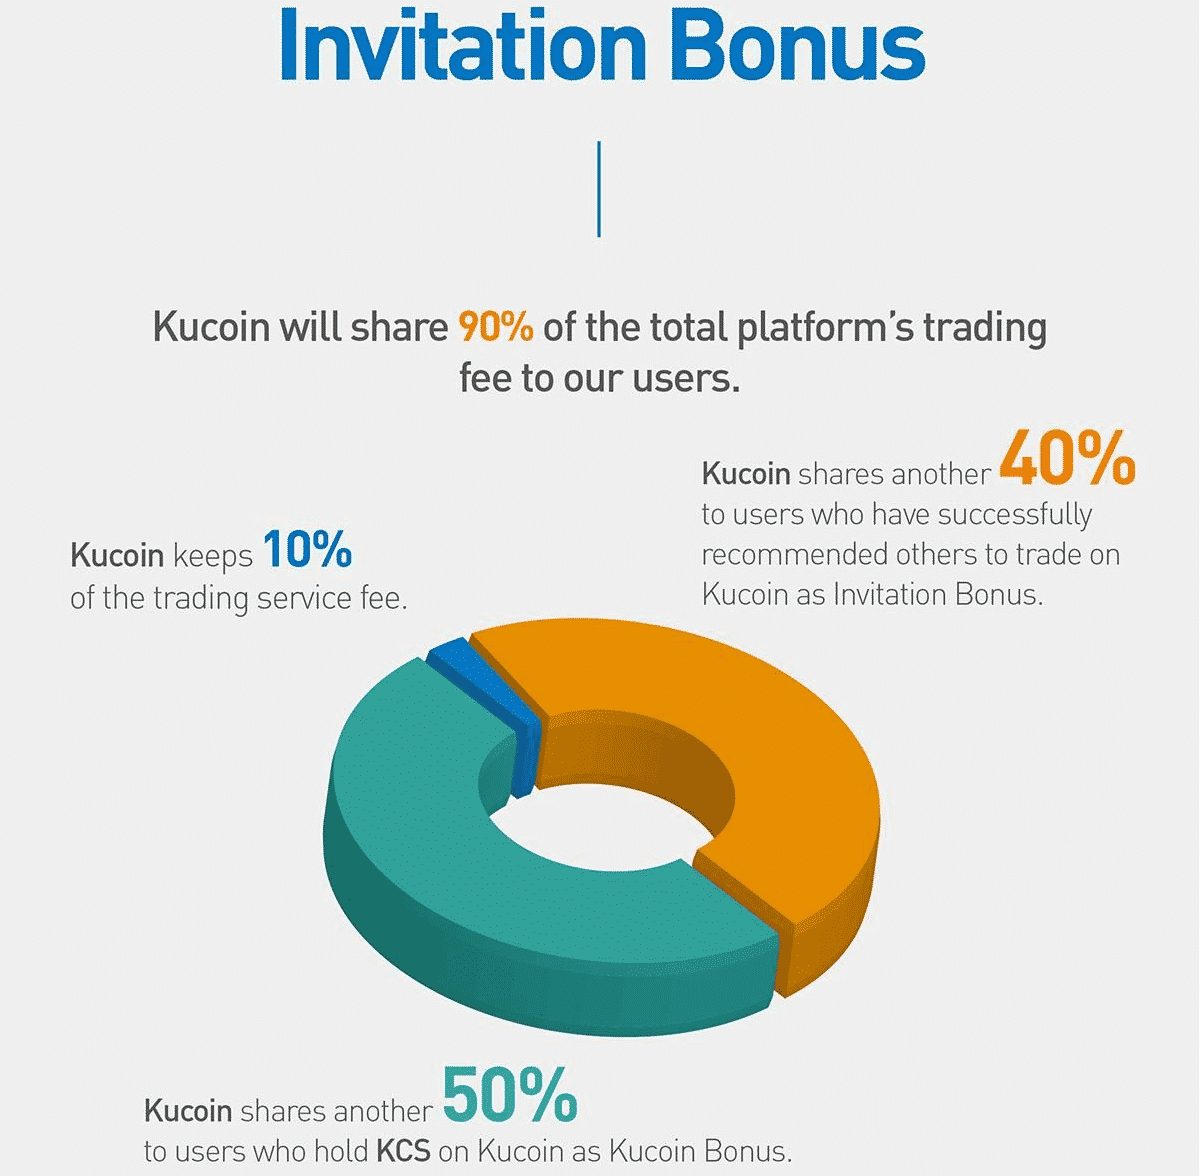 Kucoin Invitation Bonus